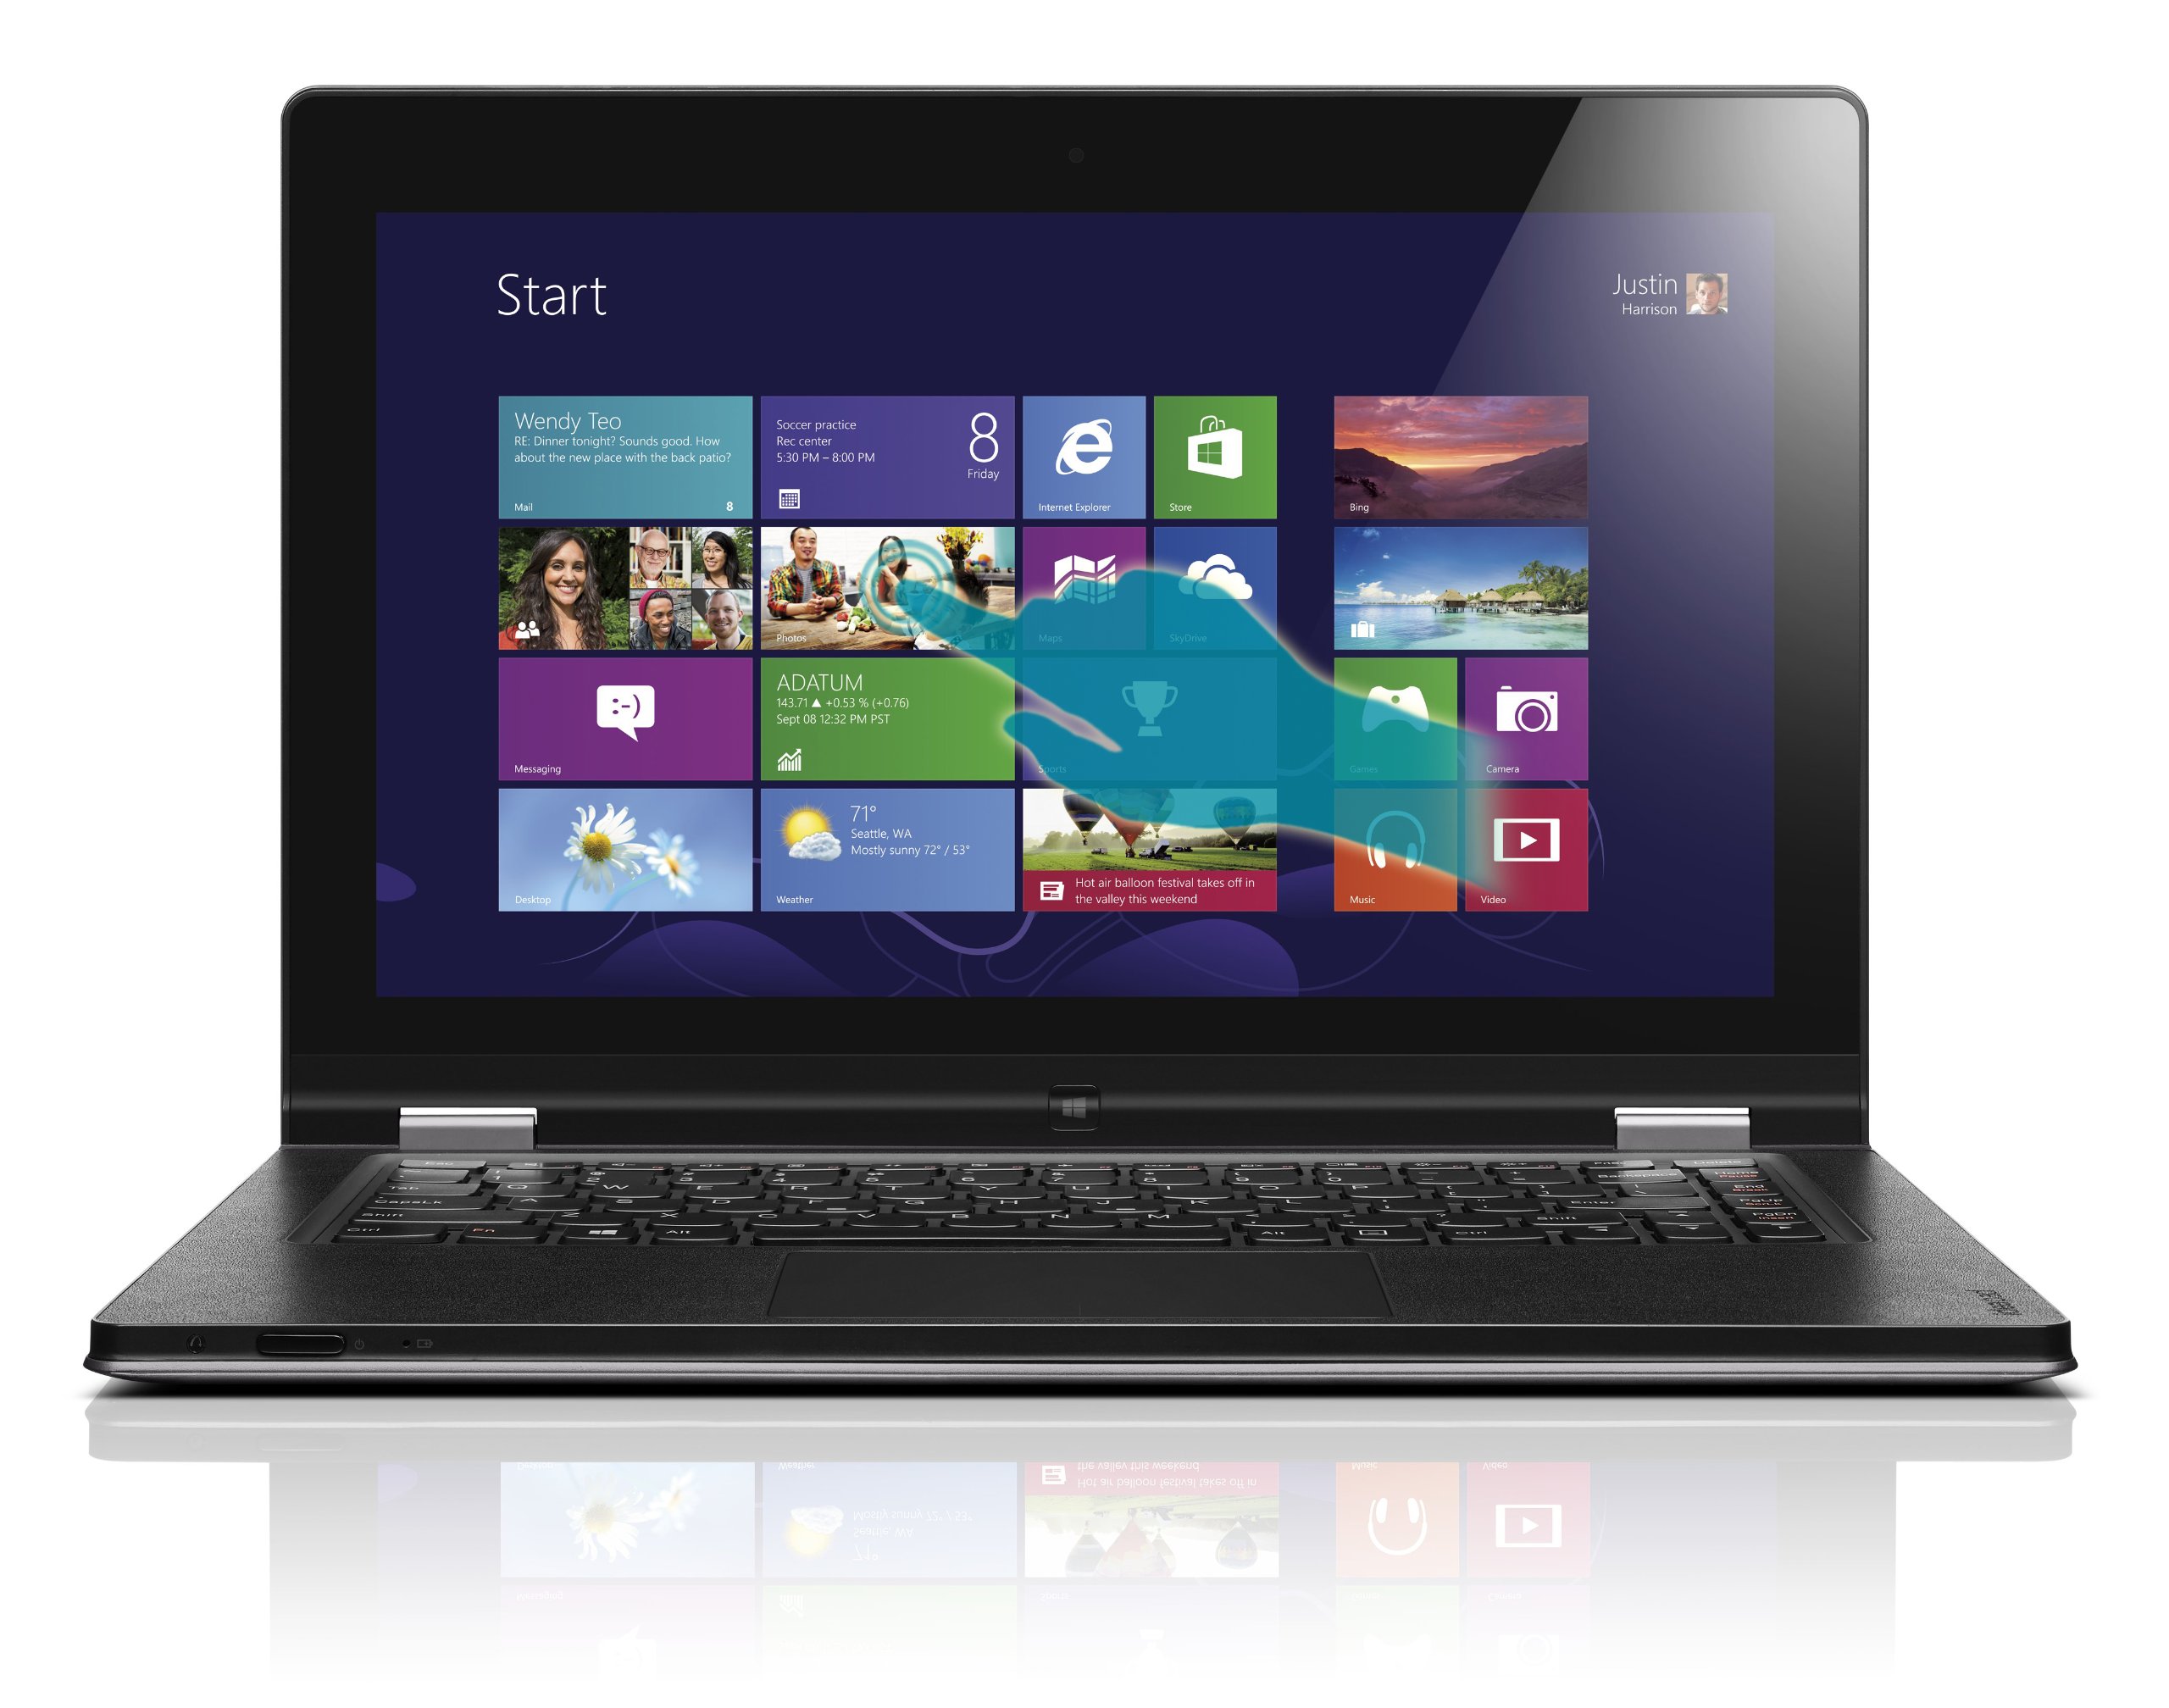 Lenovo IdeaPad Yoga 13 13.3-Inch Convertible 2 in 1 Touchscreen Ultrabook (Gray) 2013 Model